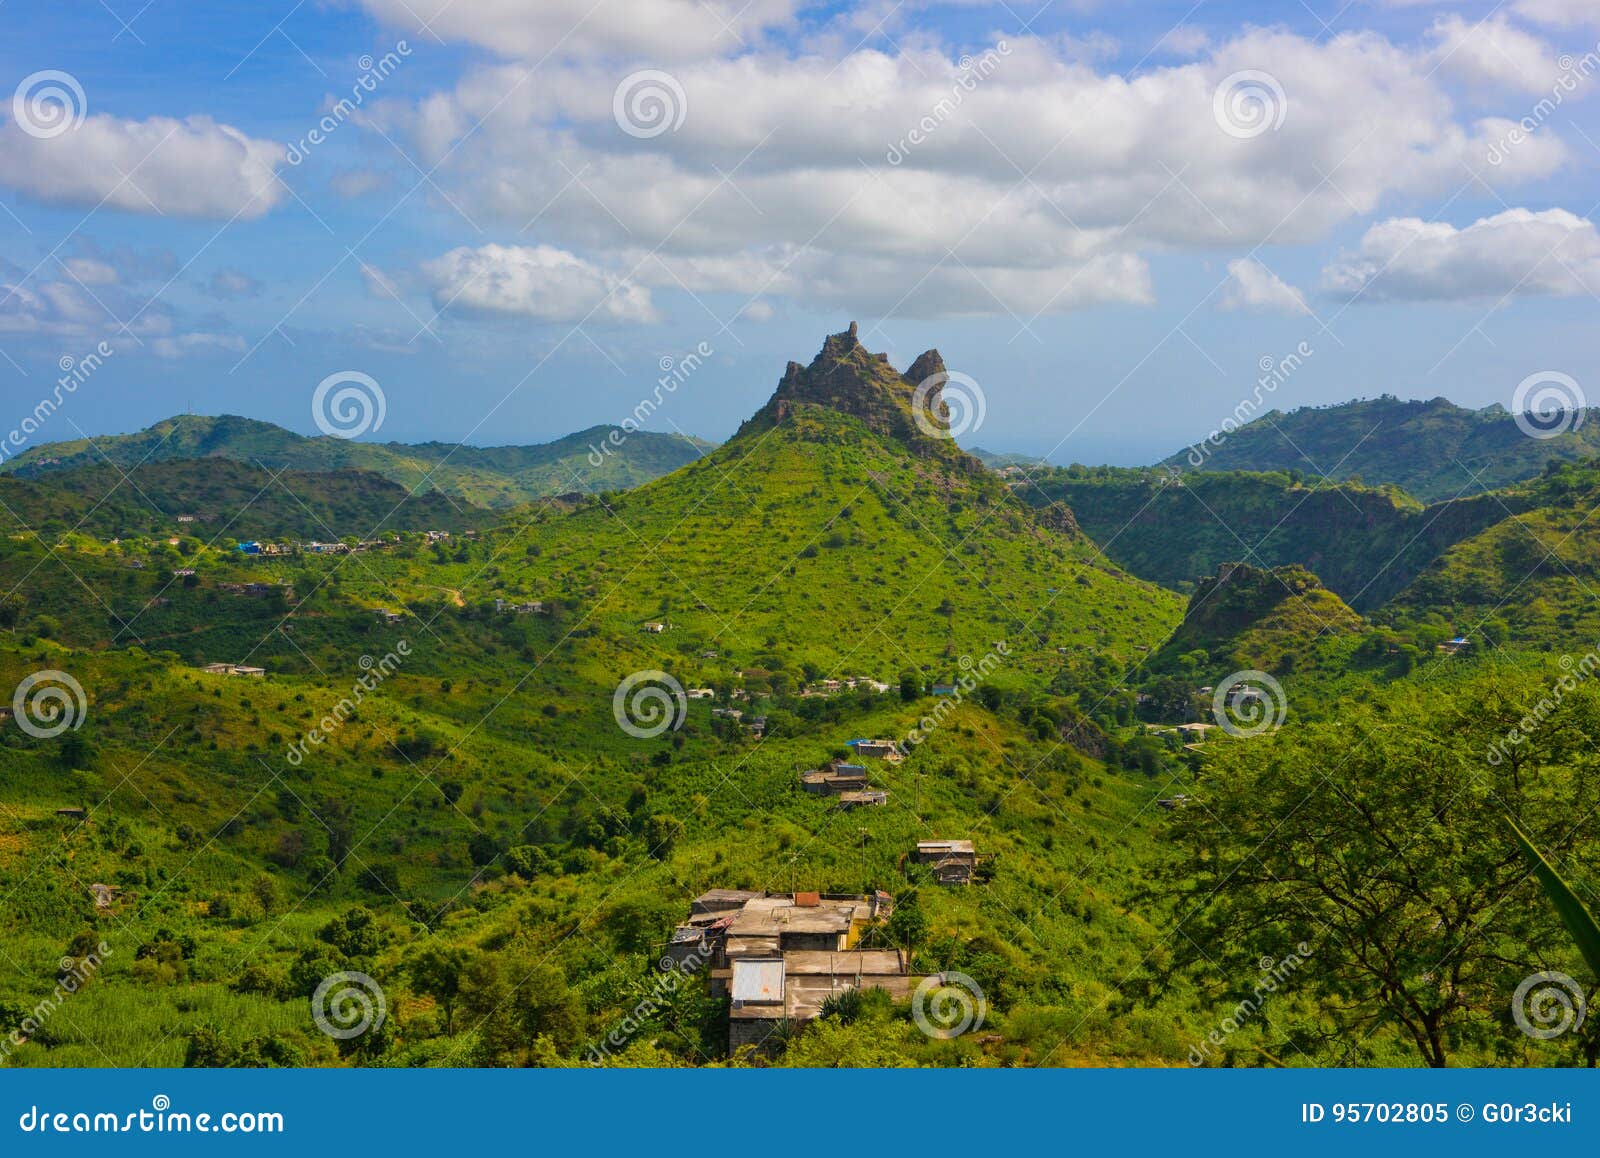 cape verde volcanic and fertile landscape, rural houses, santiago island